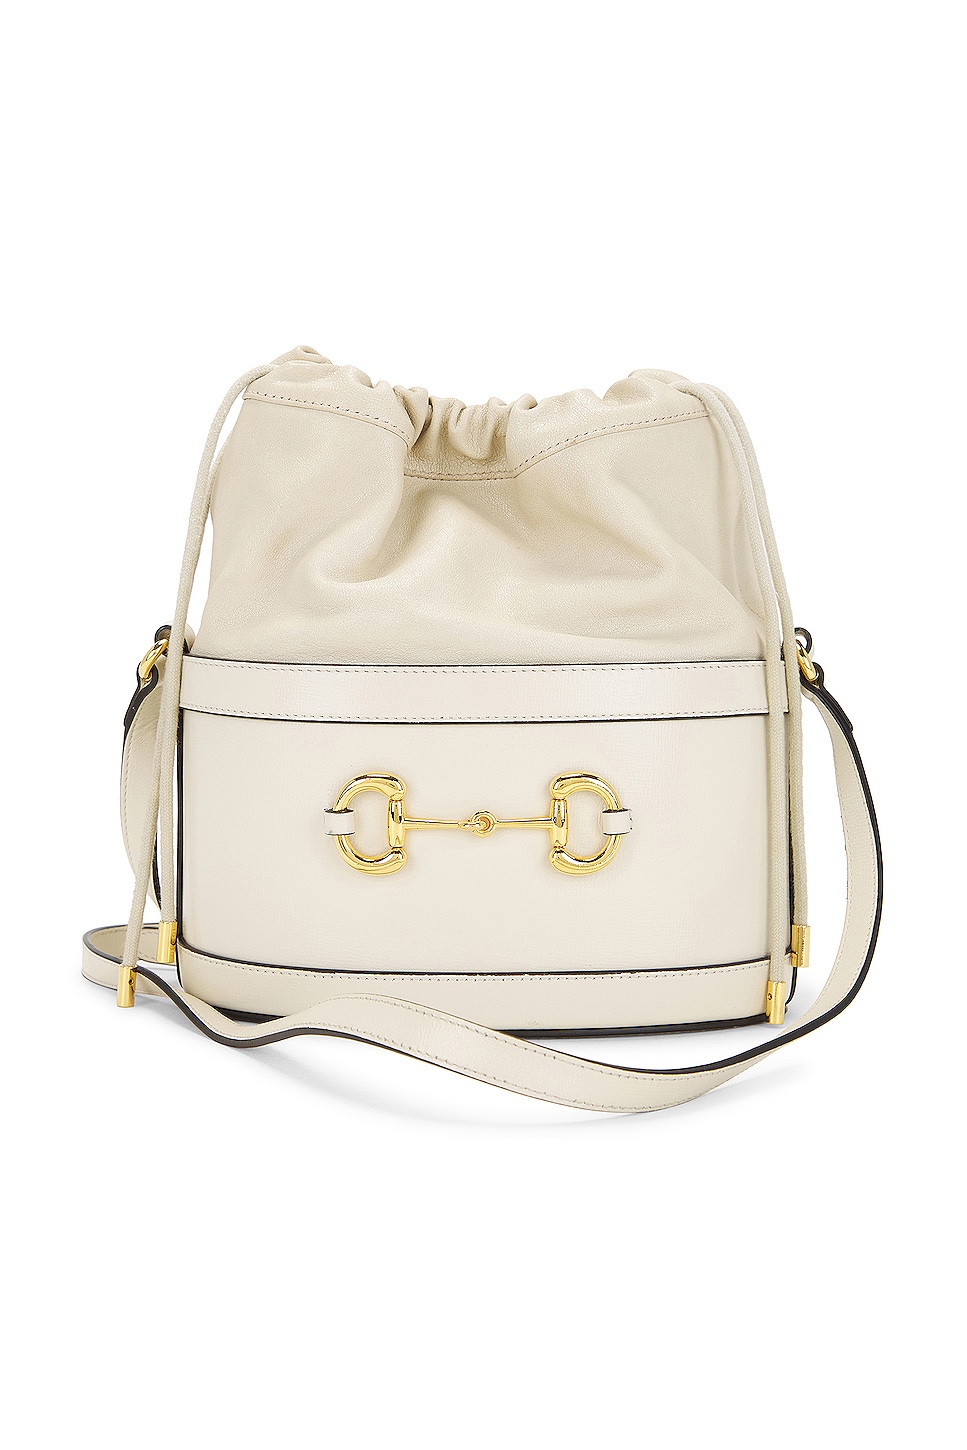 Gucci's 1955 Horsebit Bag Is The Latest Celebrity Favourite